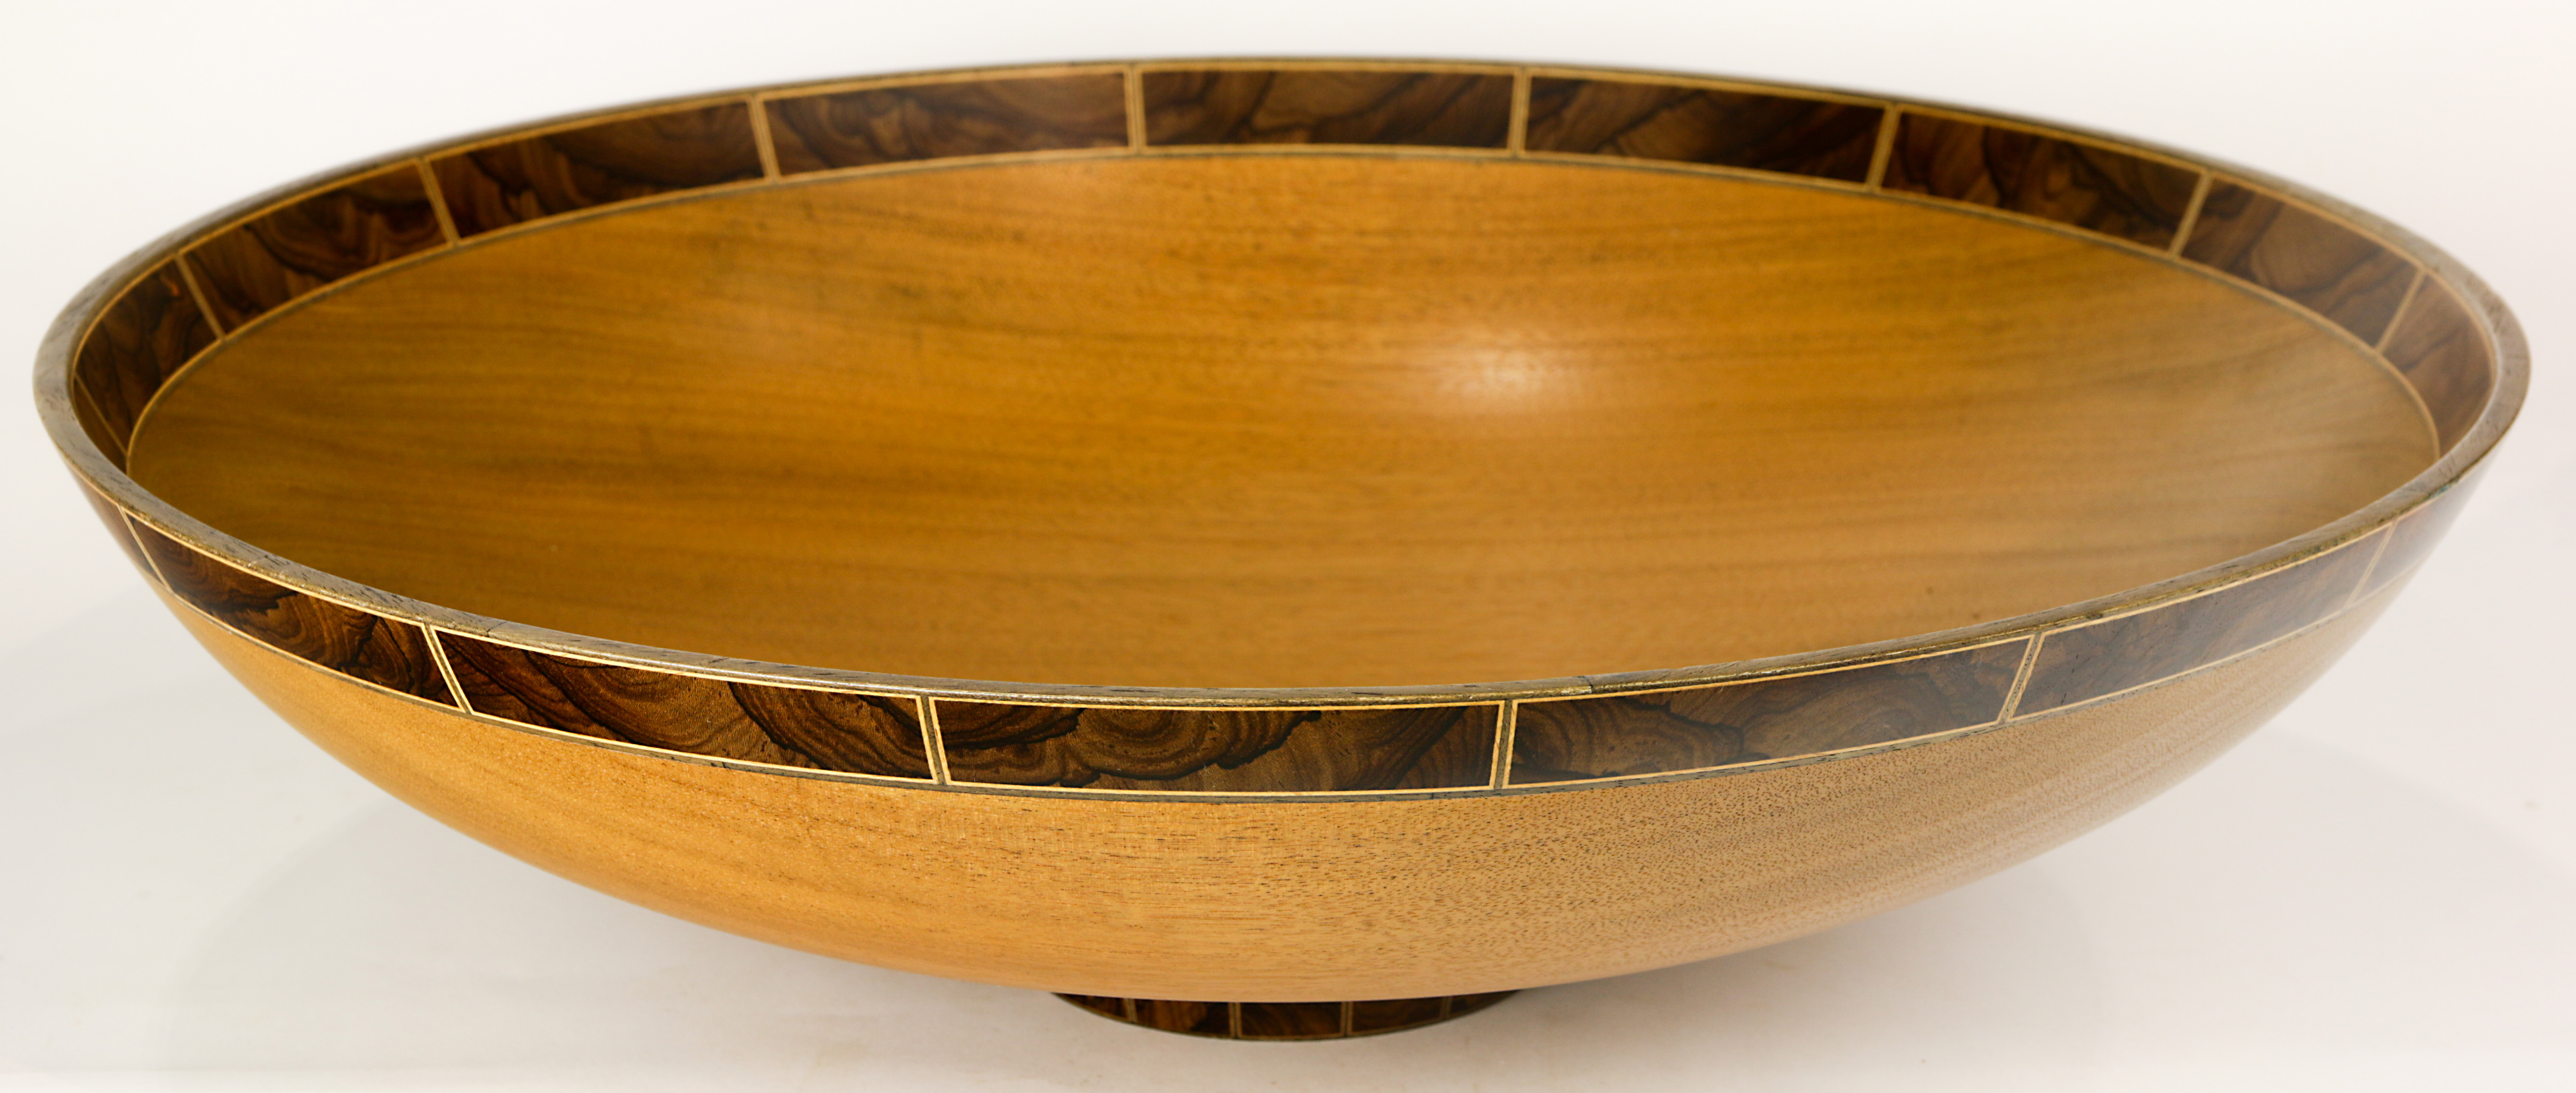 A Barry Macdonald wood turned center bowl